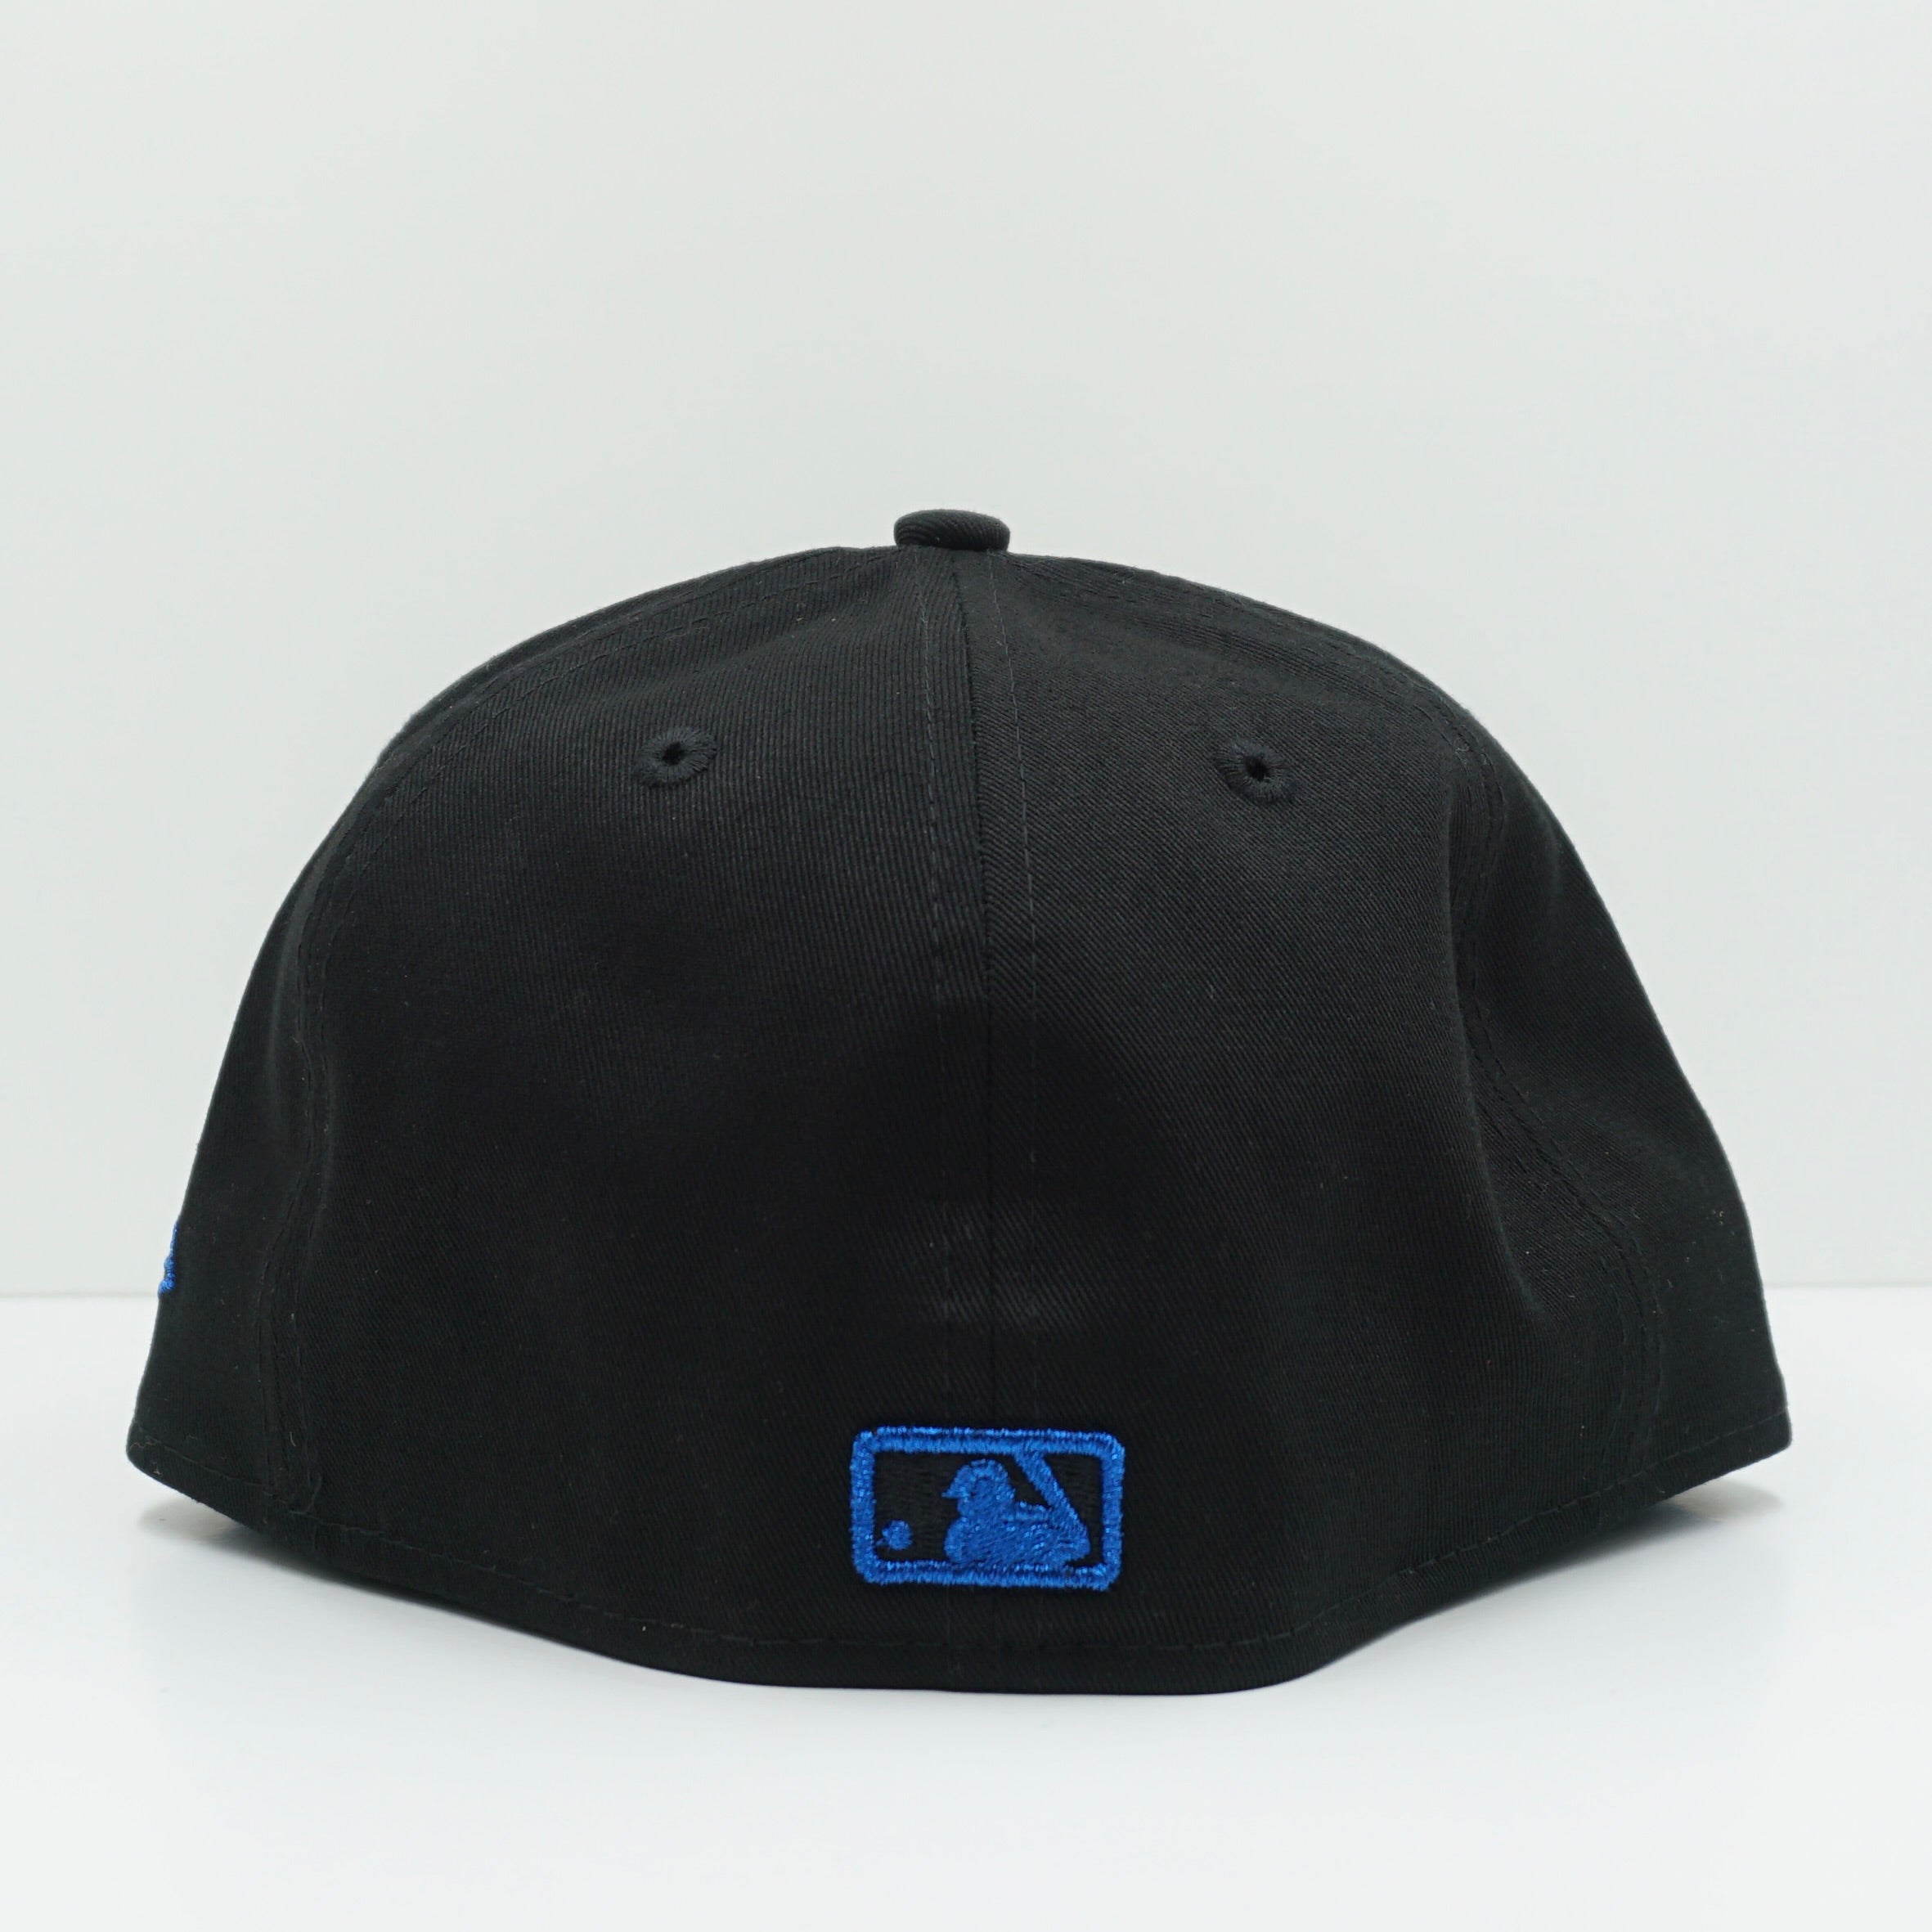 New Era New York Yankees Black/Blue Fitted Cap